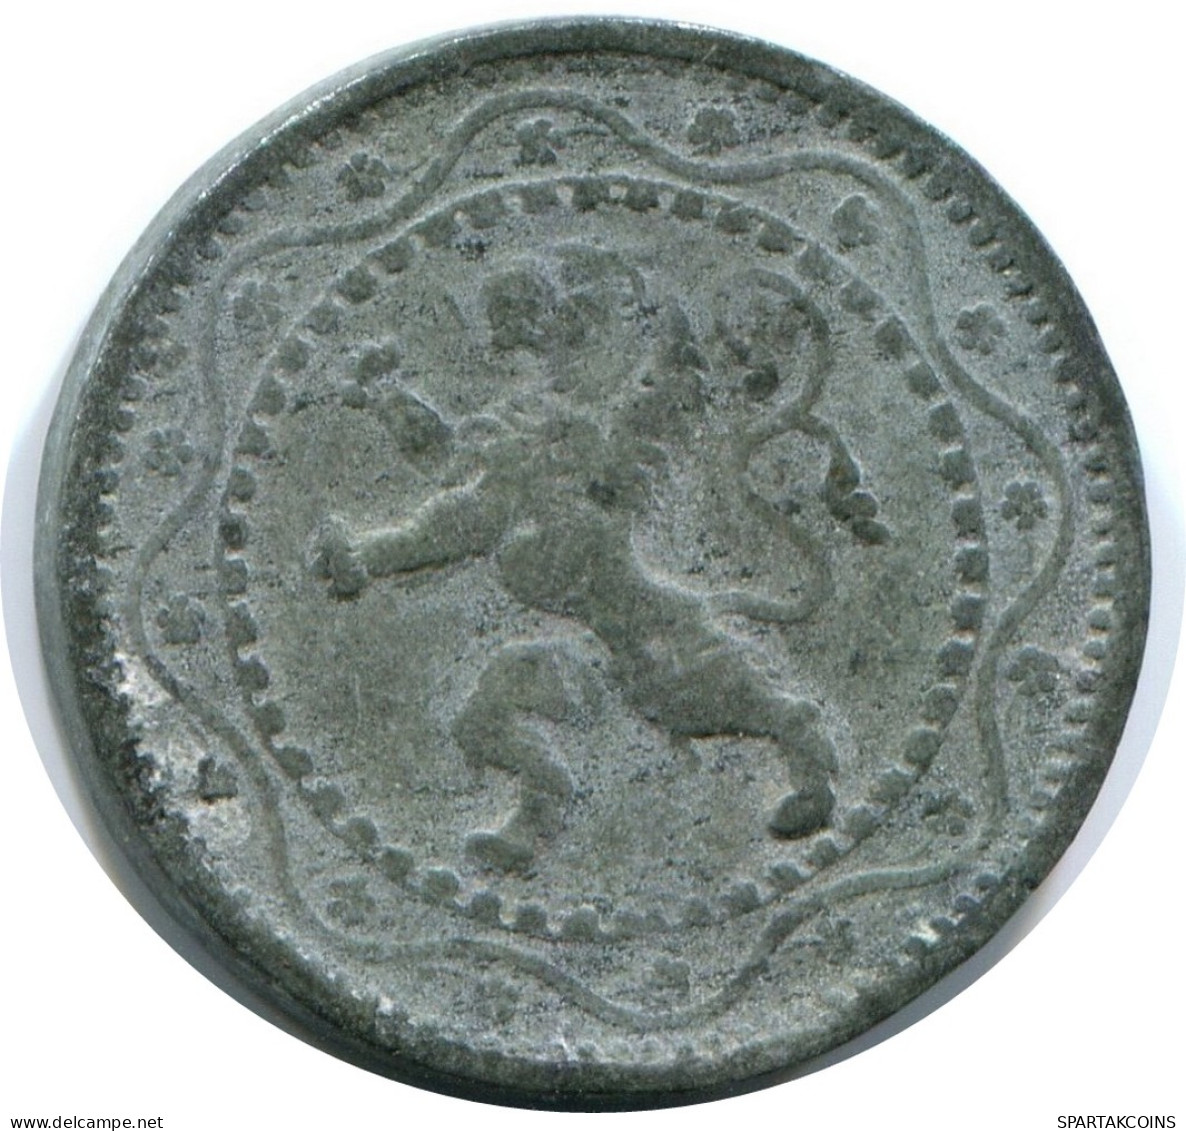 5 CENTIMES 1916 BELGIUM Coin #AW964.U - 5 Centimes